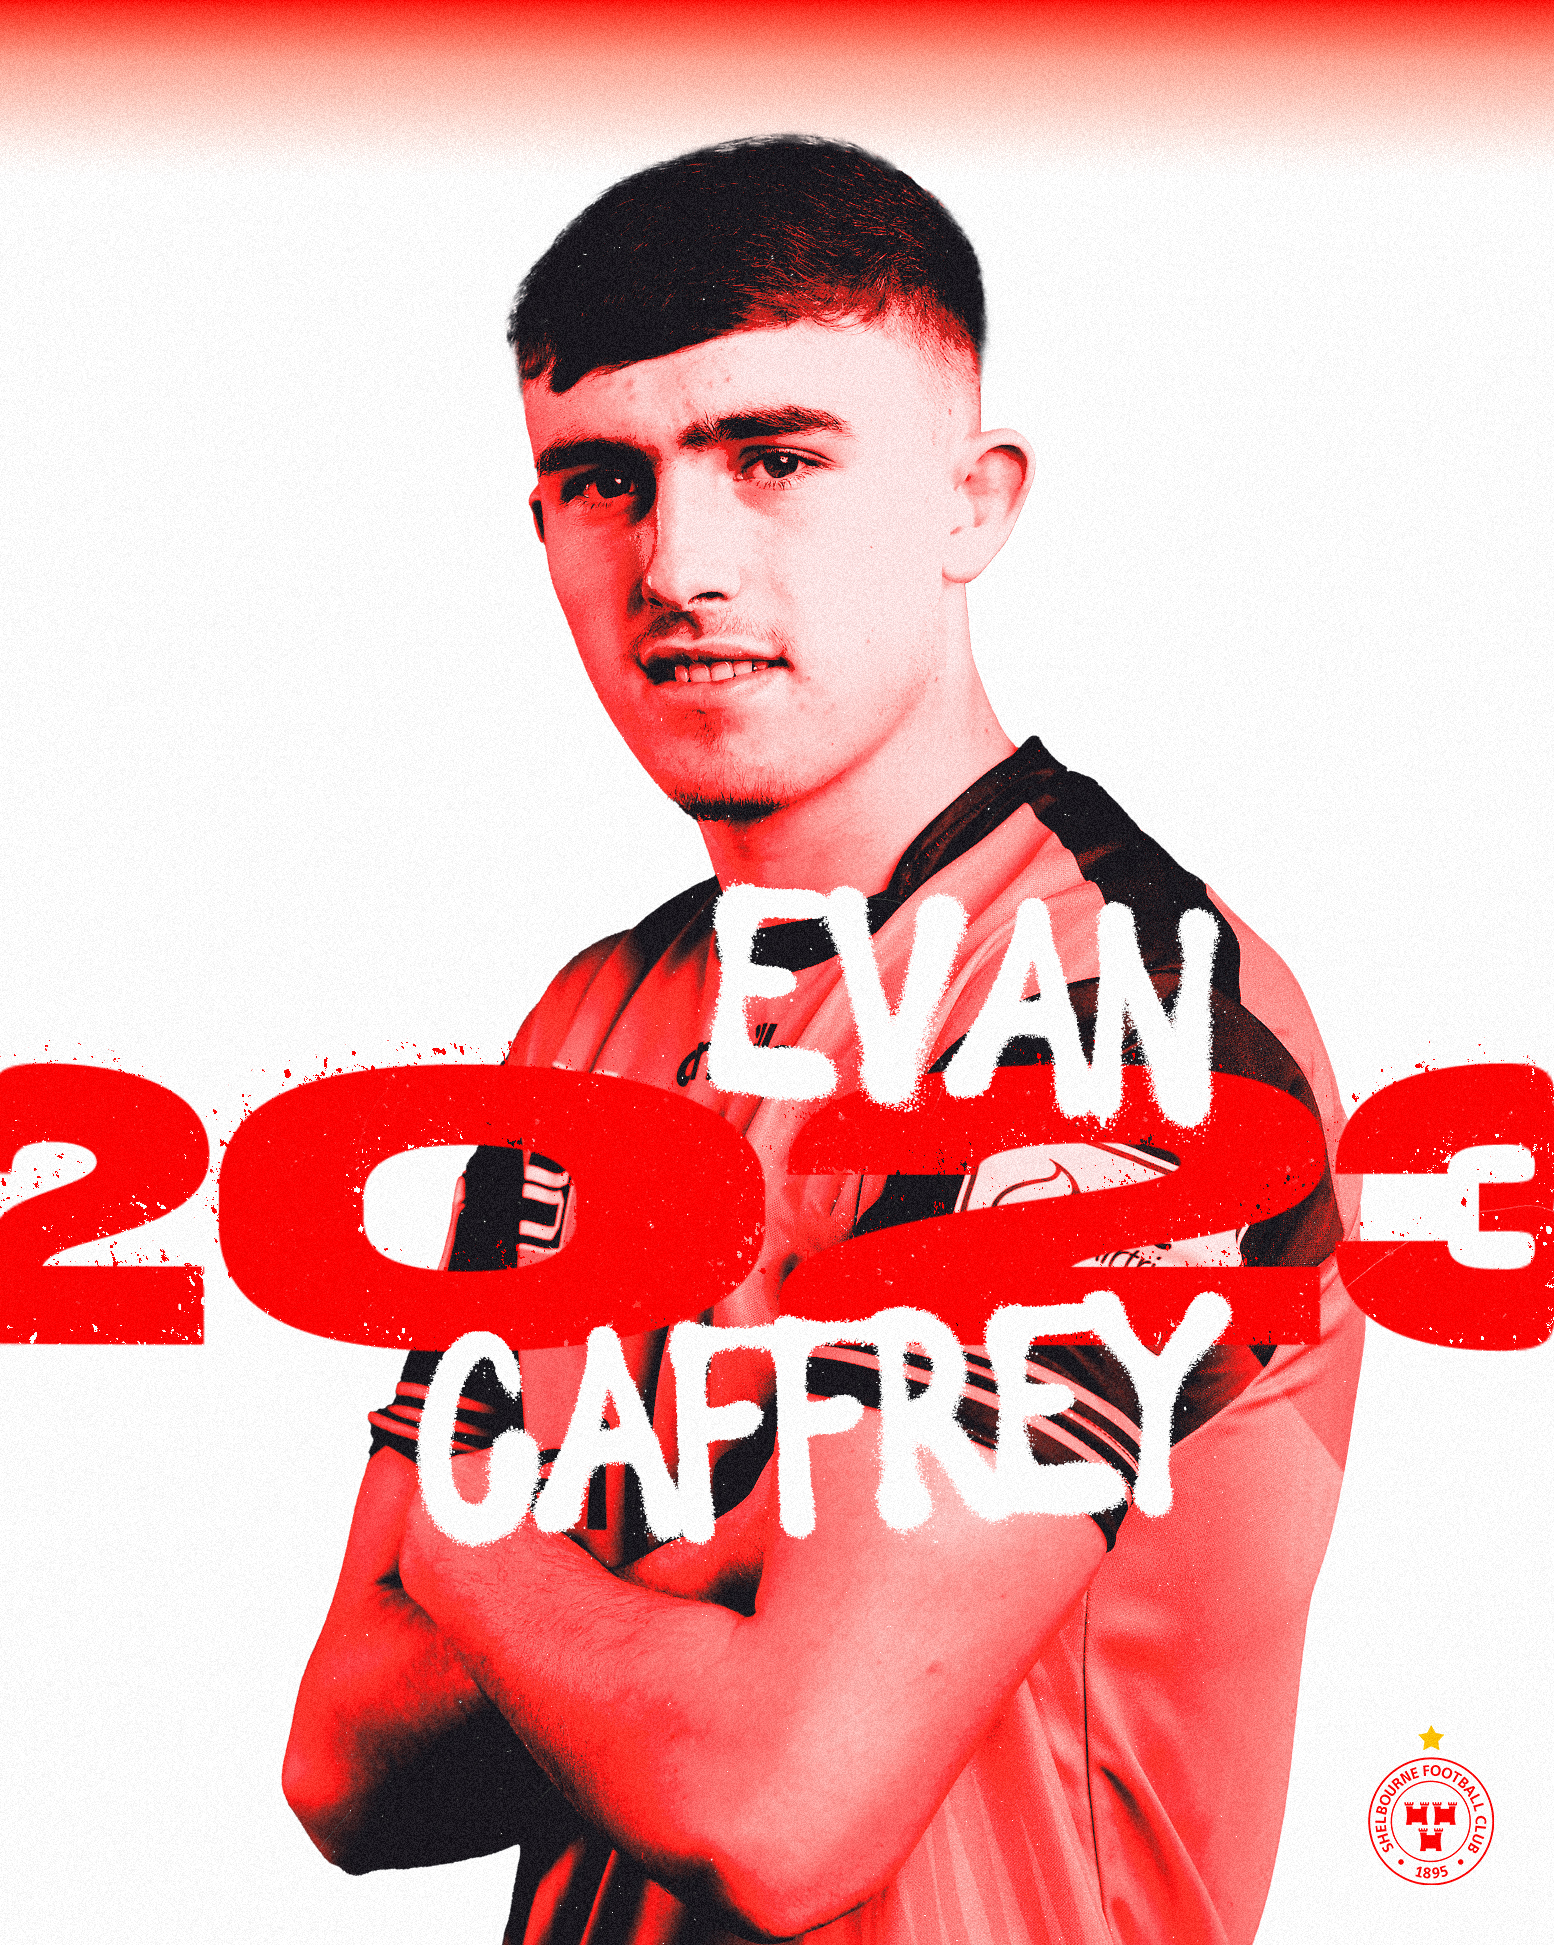 Evan Caffrey is a Red